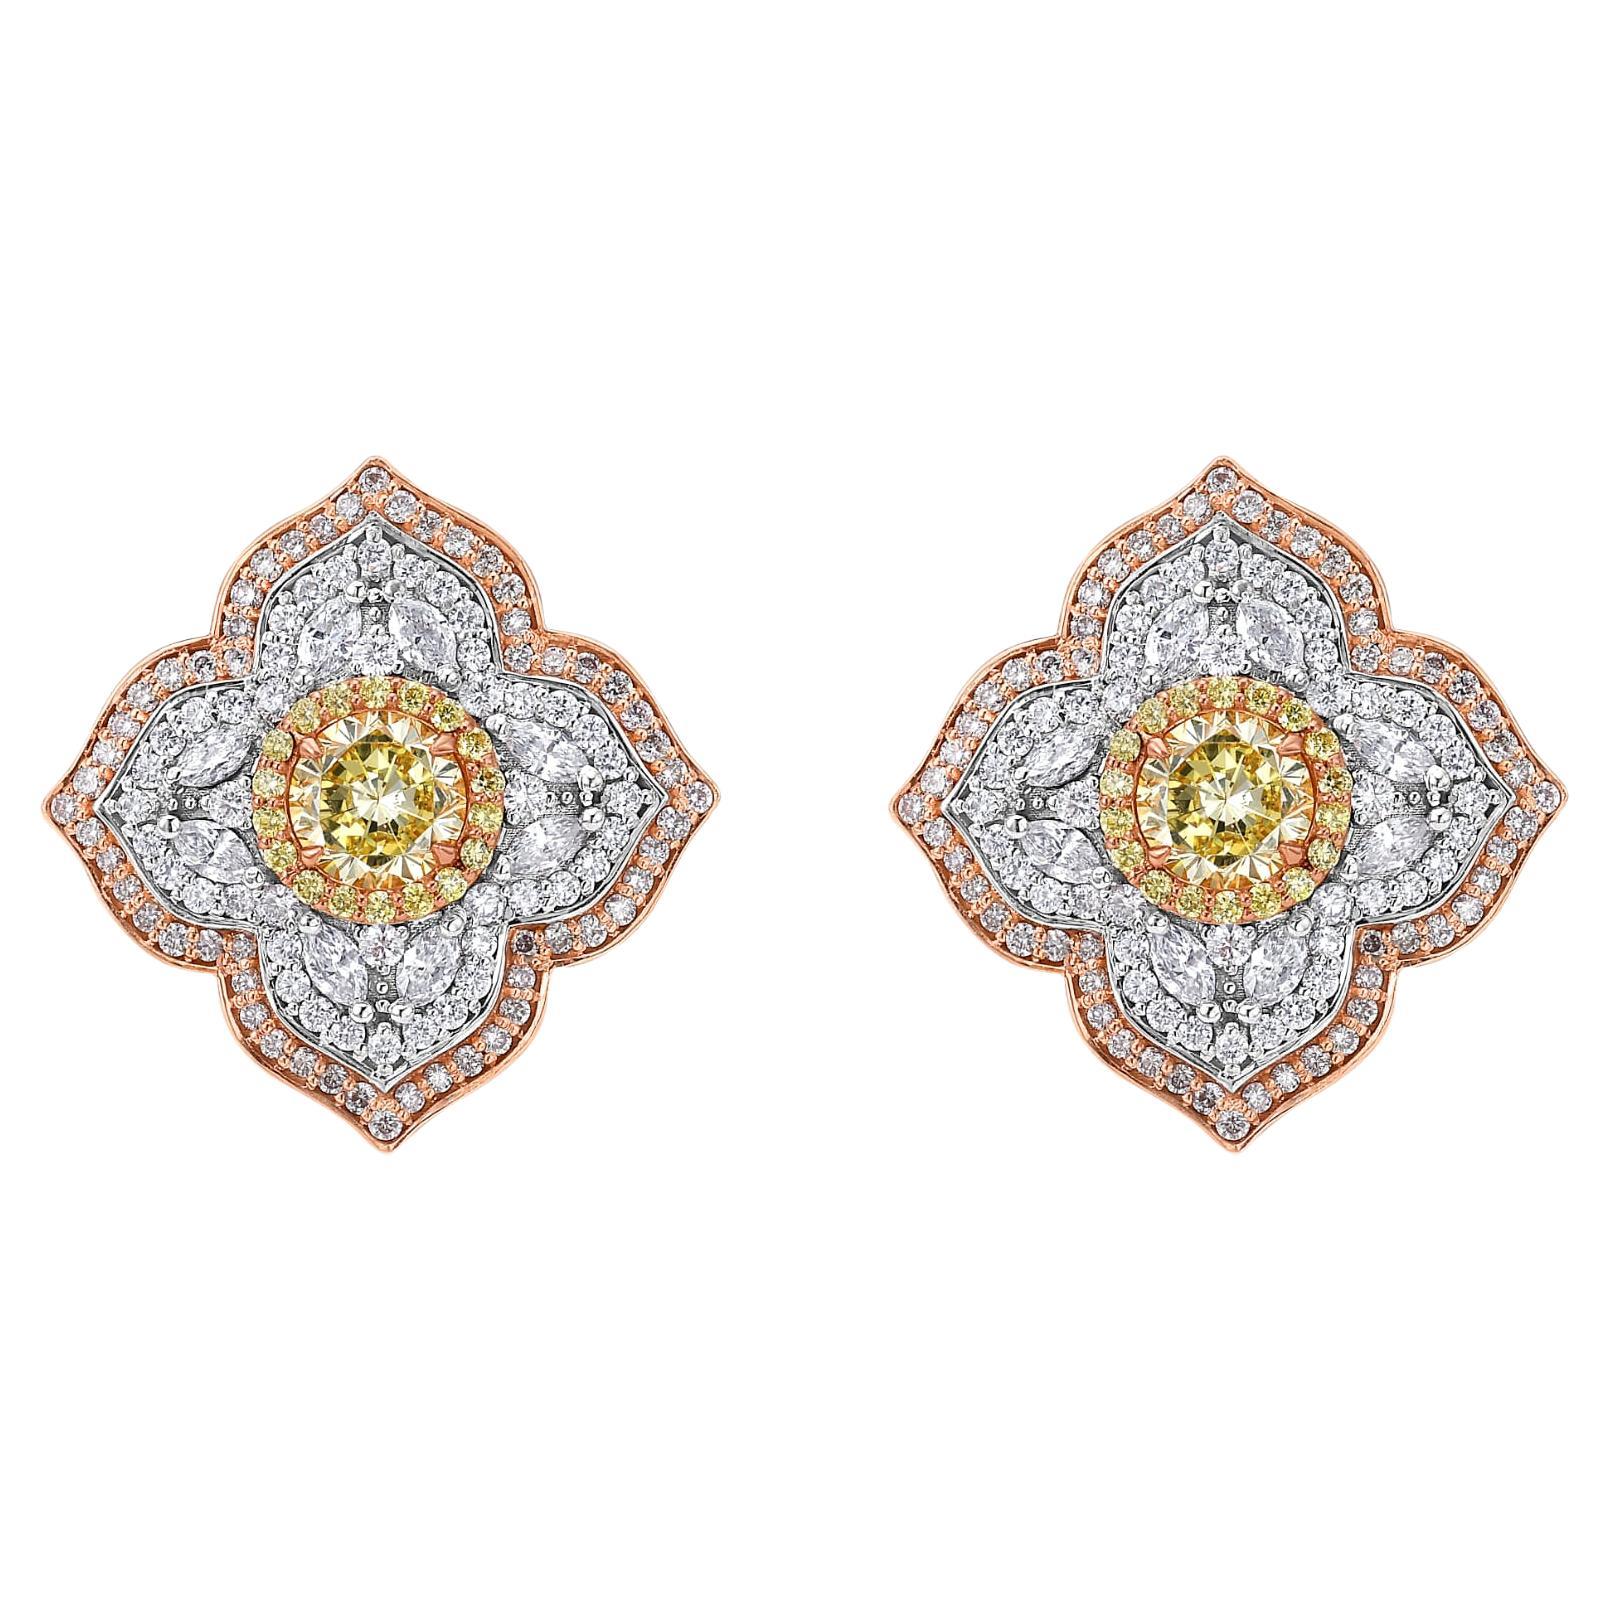 2ct Round Yellow Diamond Flower Stud Earrings